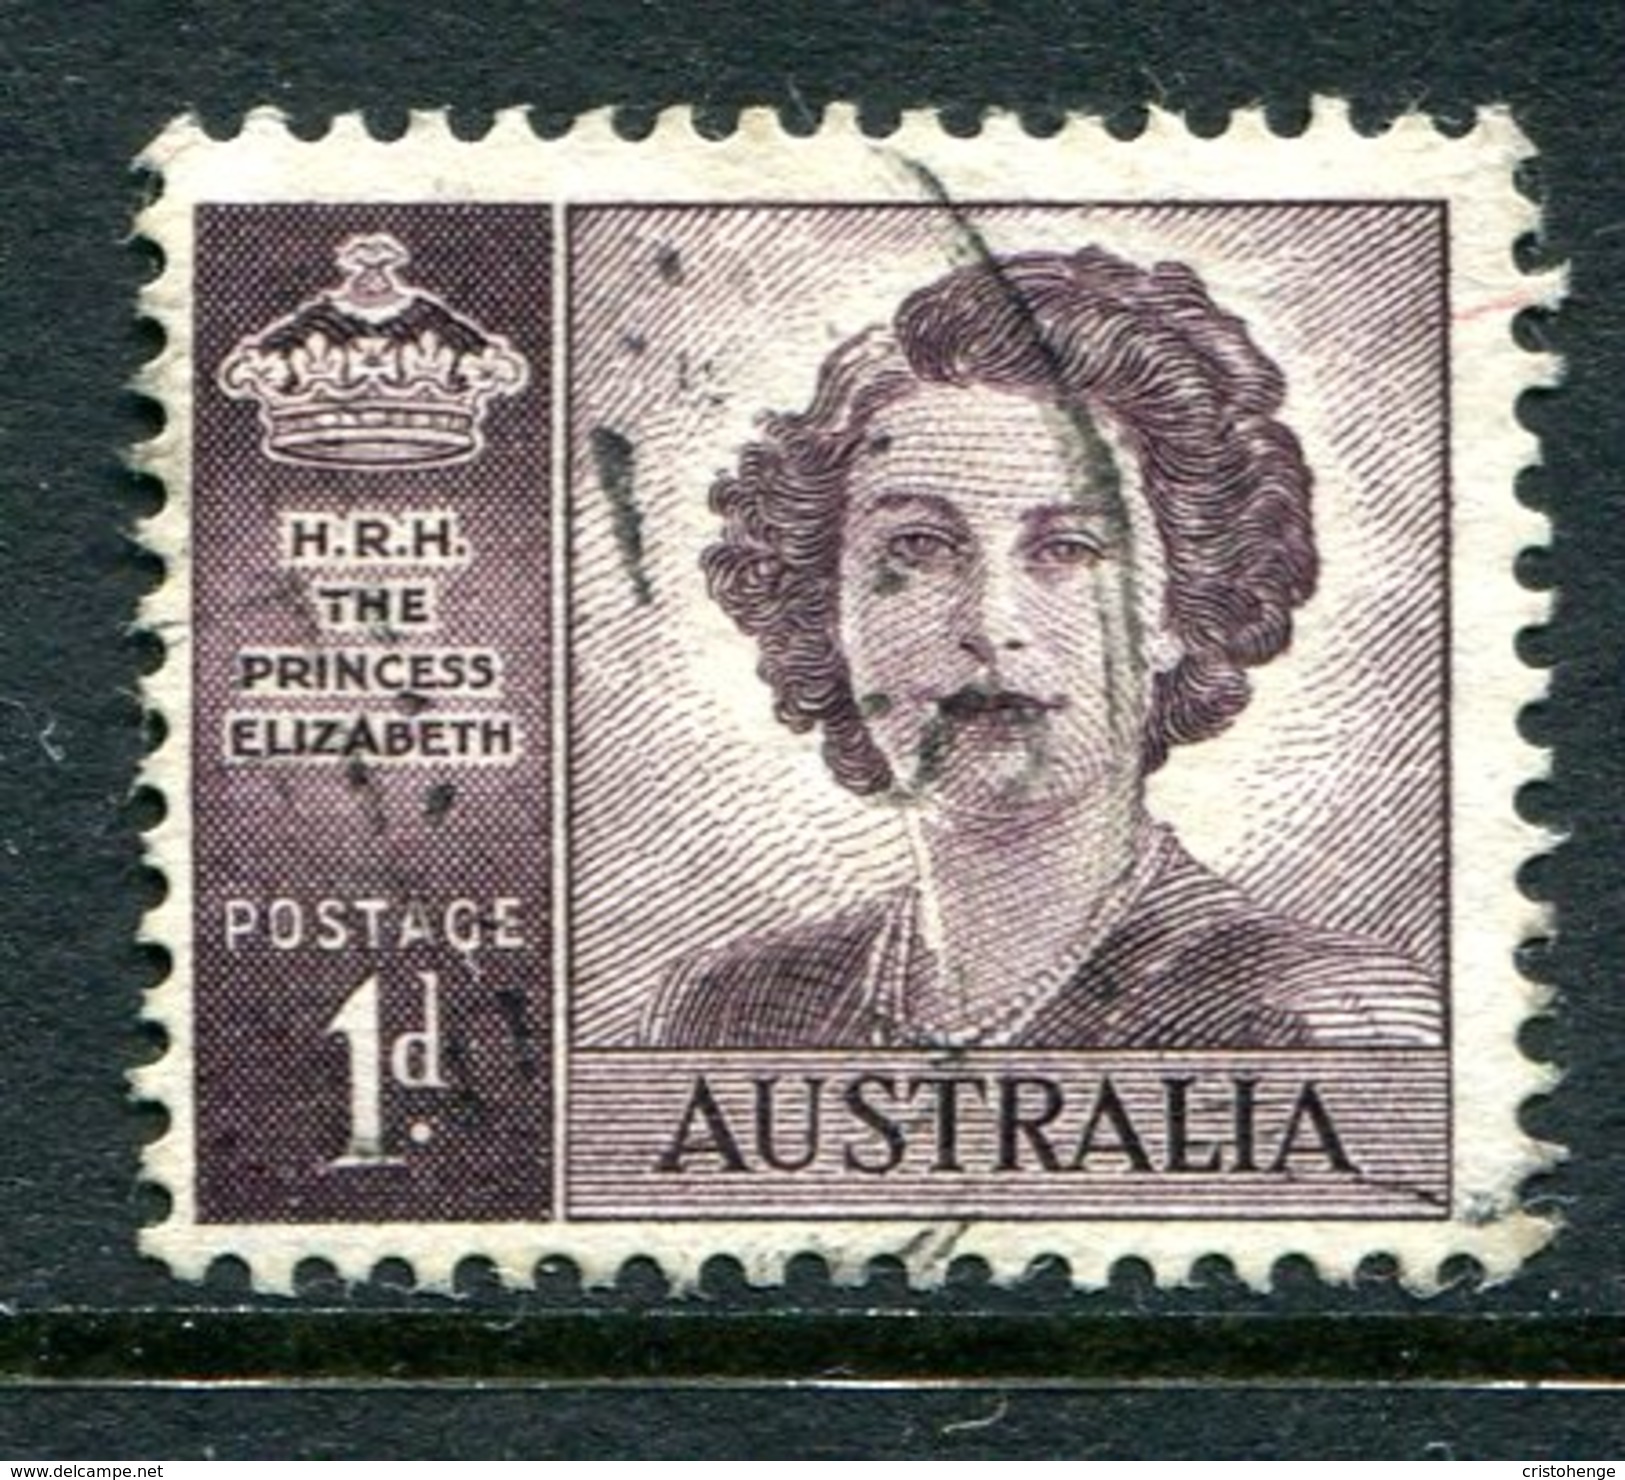 Australia 1947-52 Marriage Of Princess Elizabeth - No Wmk. Used (SG 222a) - Nuevos